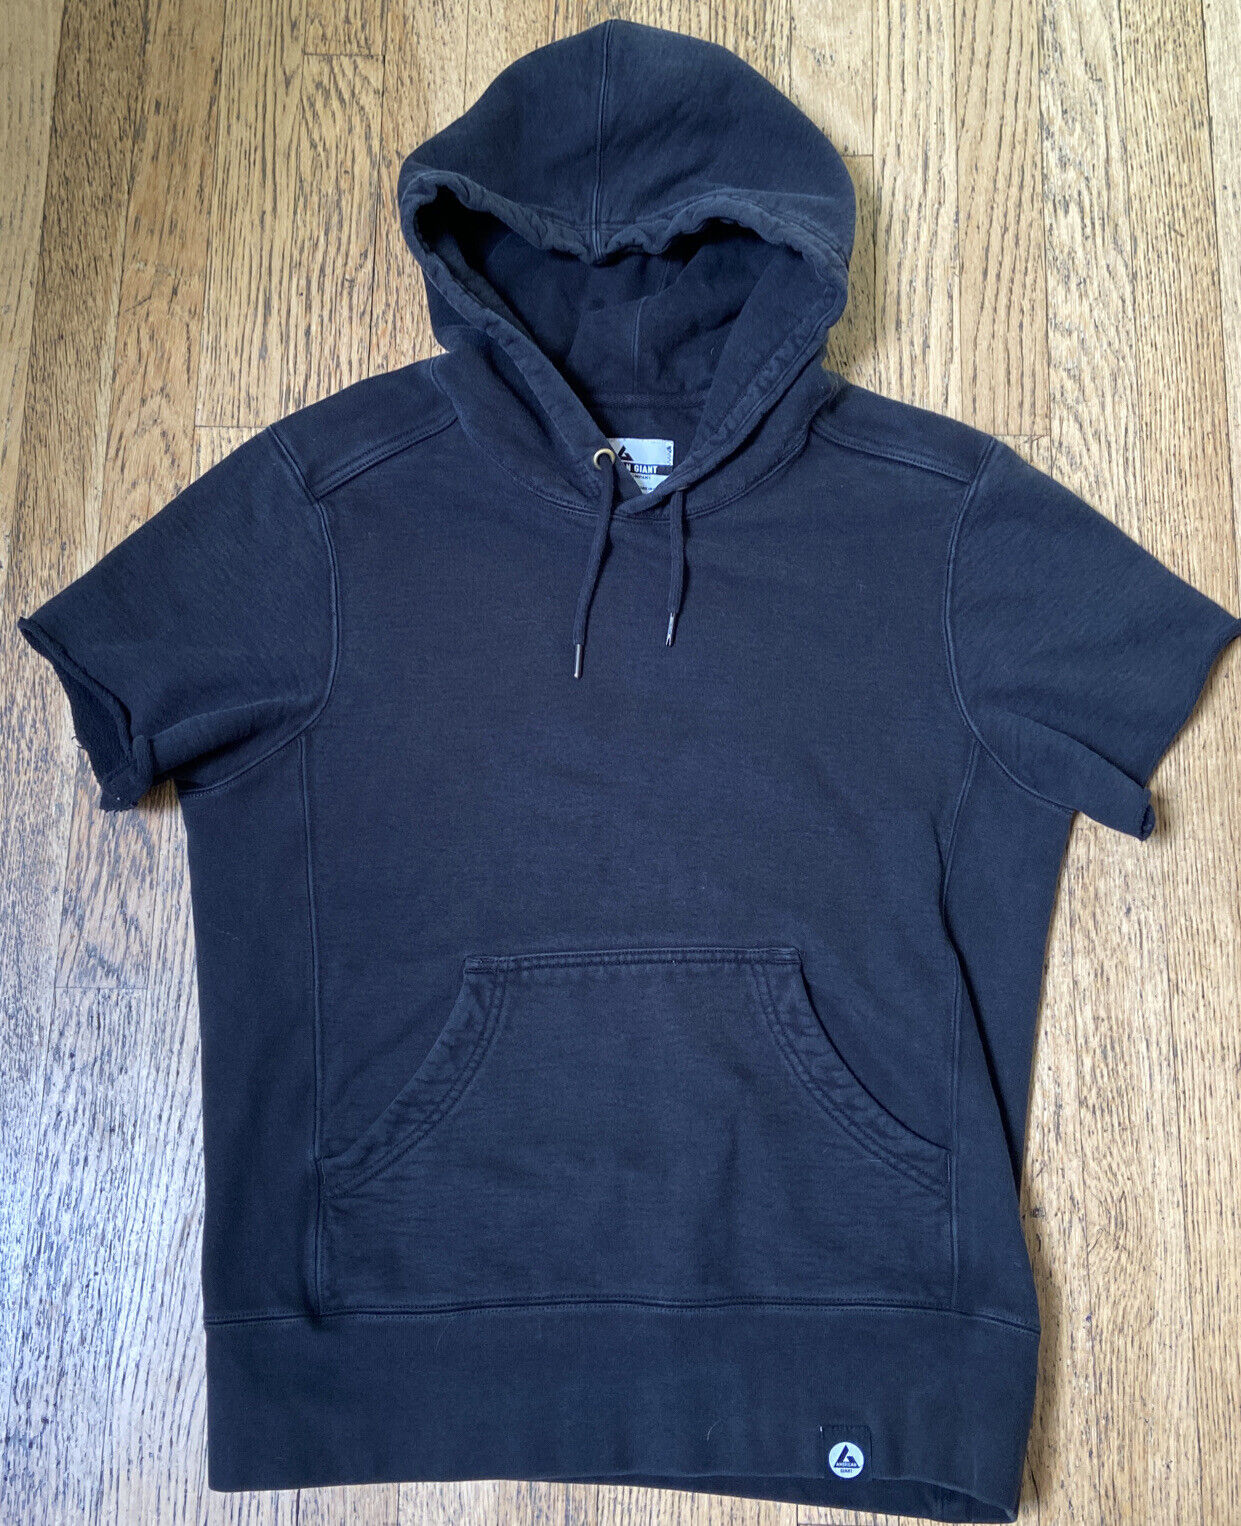 American Giant Hoodie Black Sweatshirt  sleeveles… - image 1